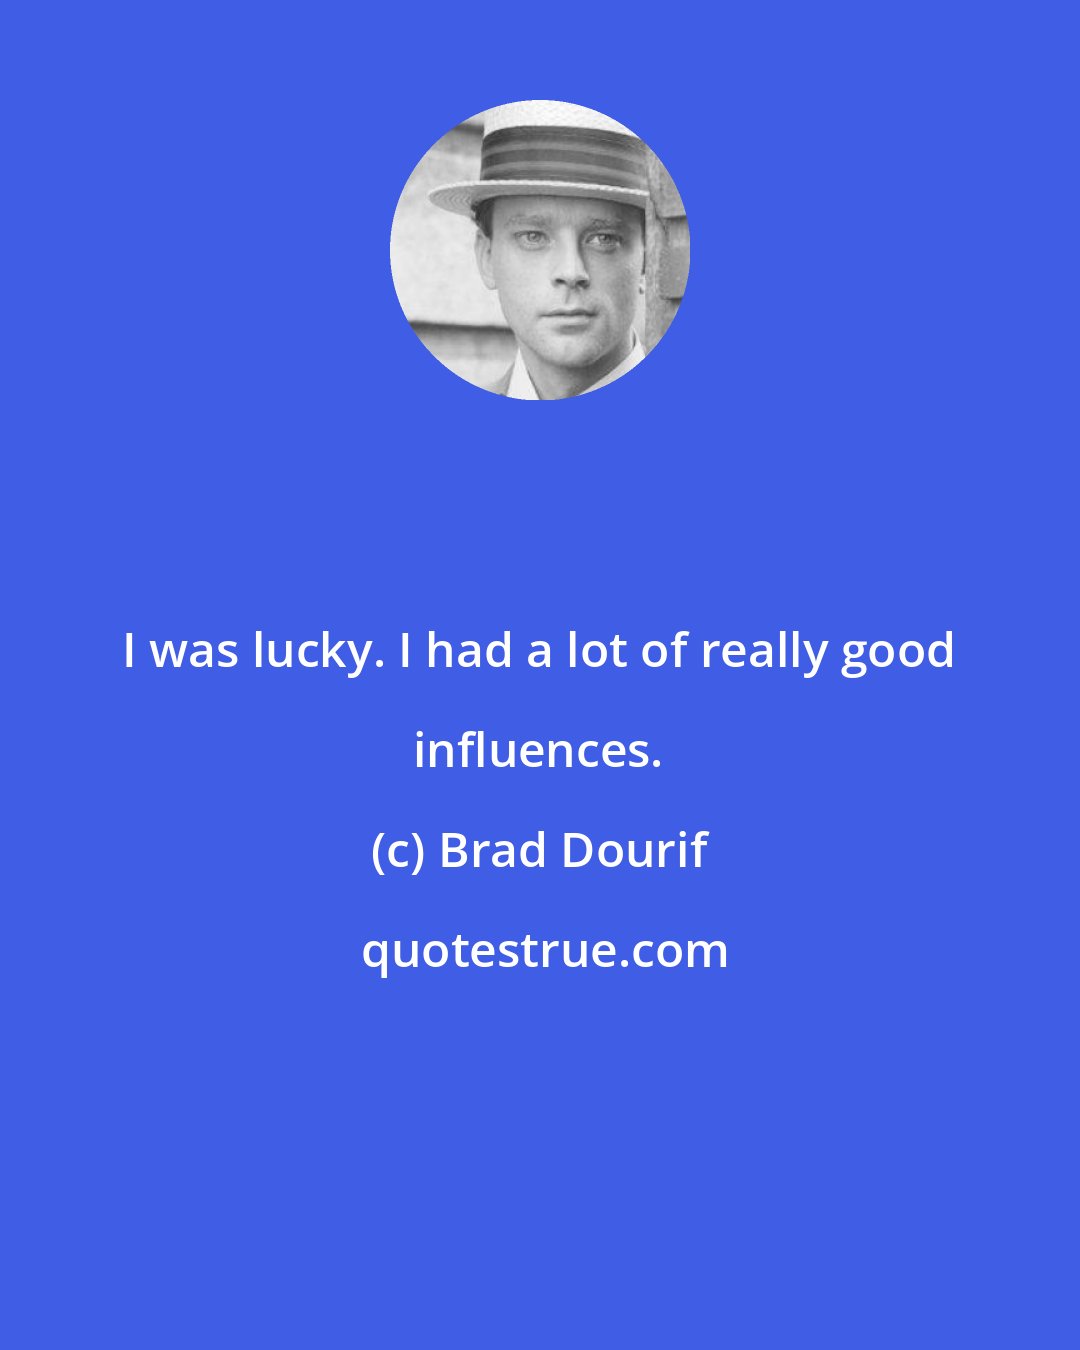 Brad Dourif: I was lucky. I had a lot of really good influences.